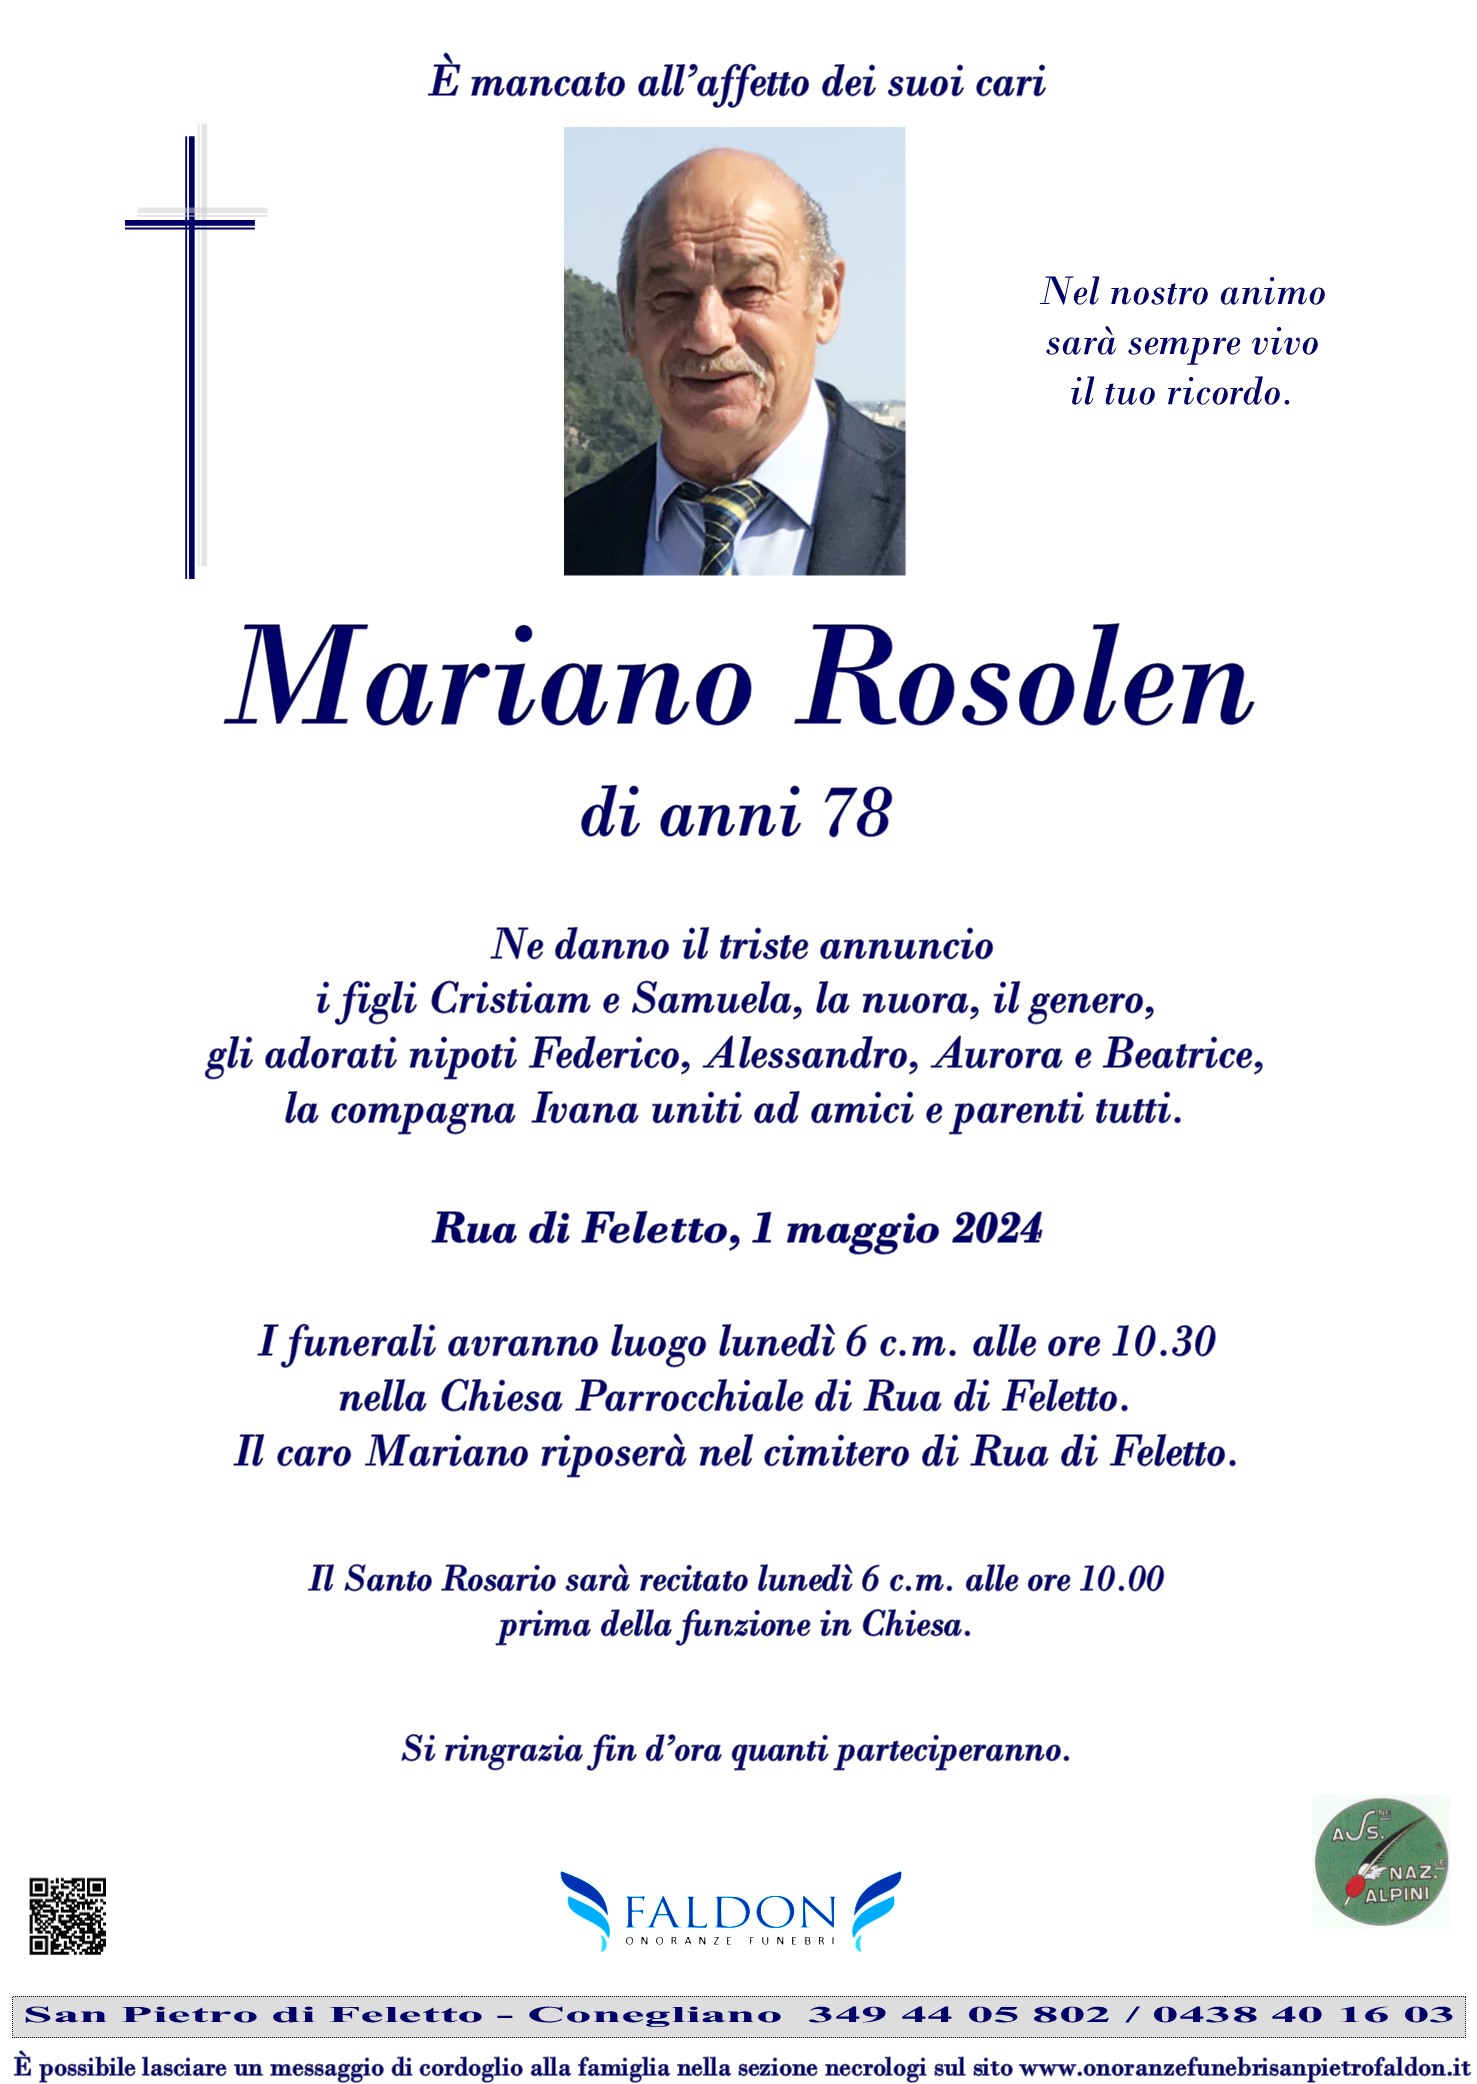 Mariano Rosolen